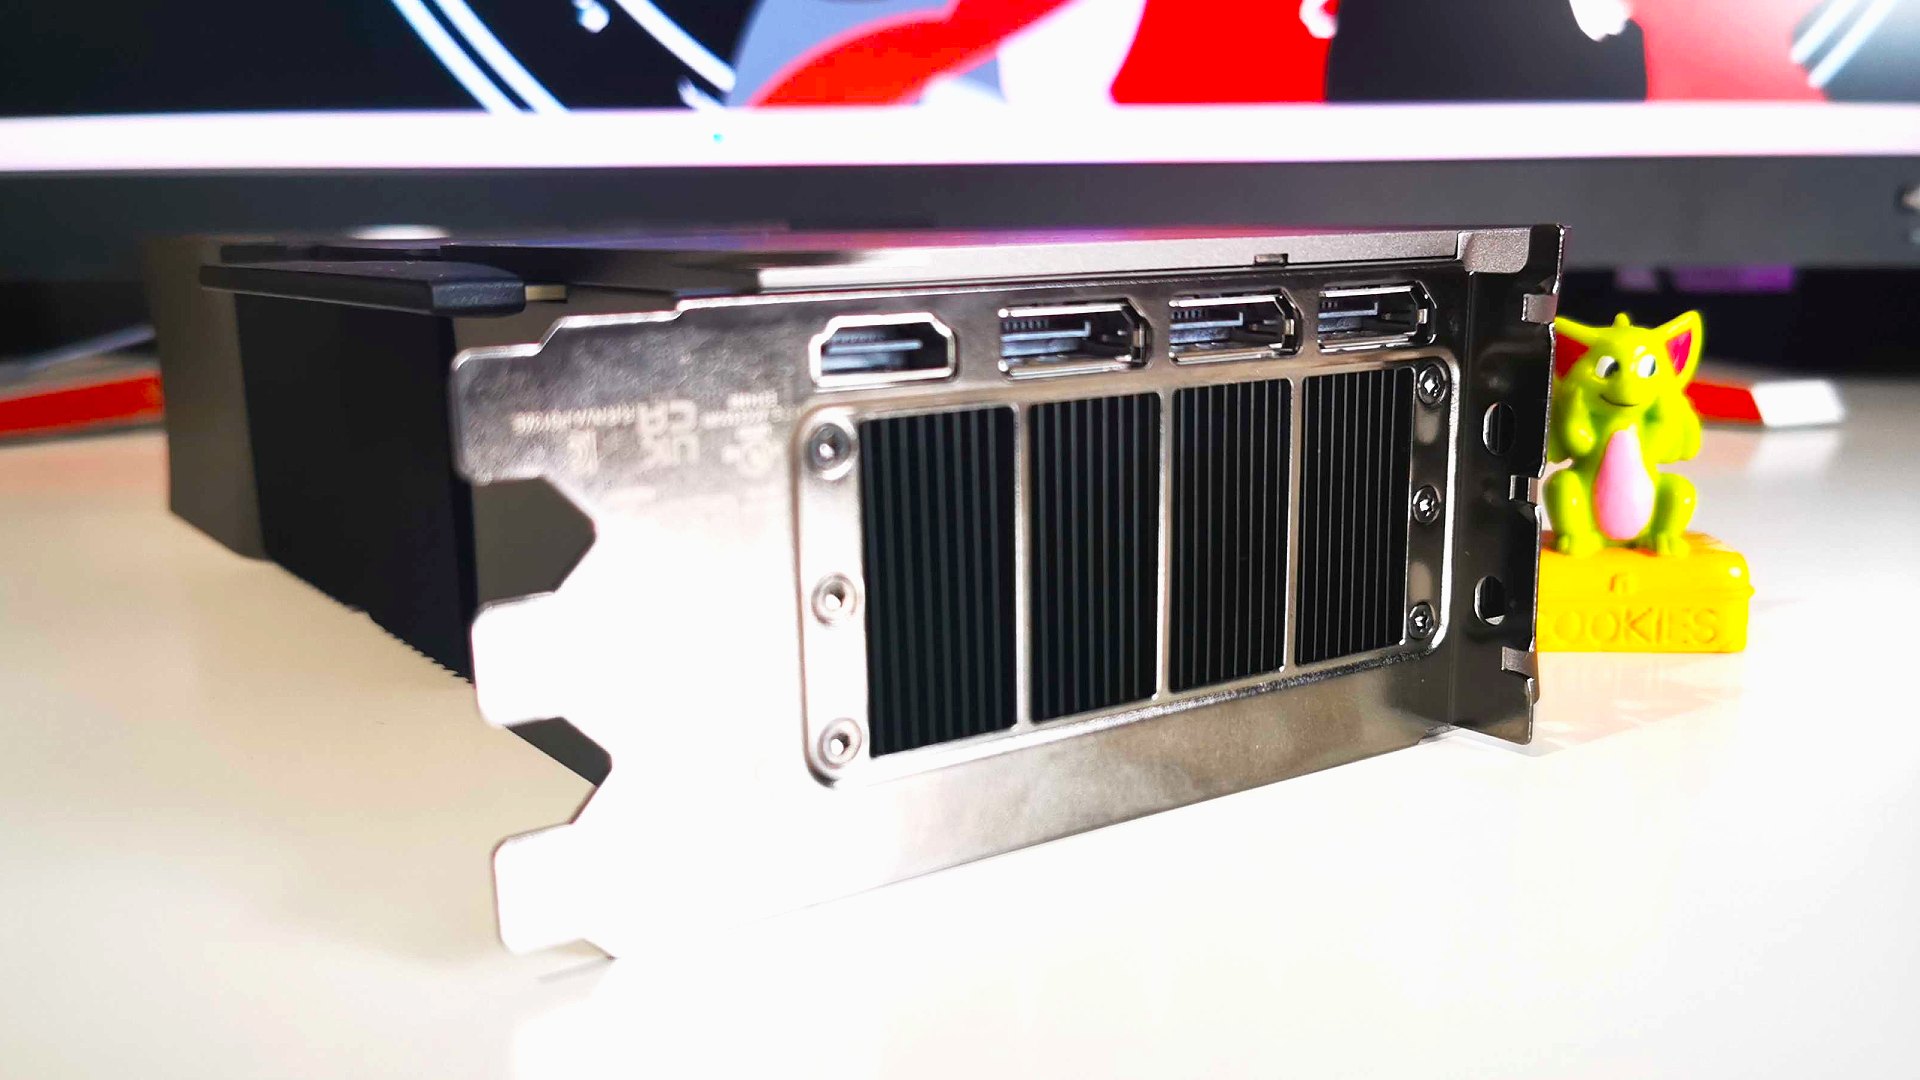 Nvidia RTX 4080 with ports facing camera on white desk